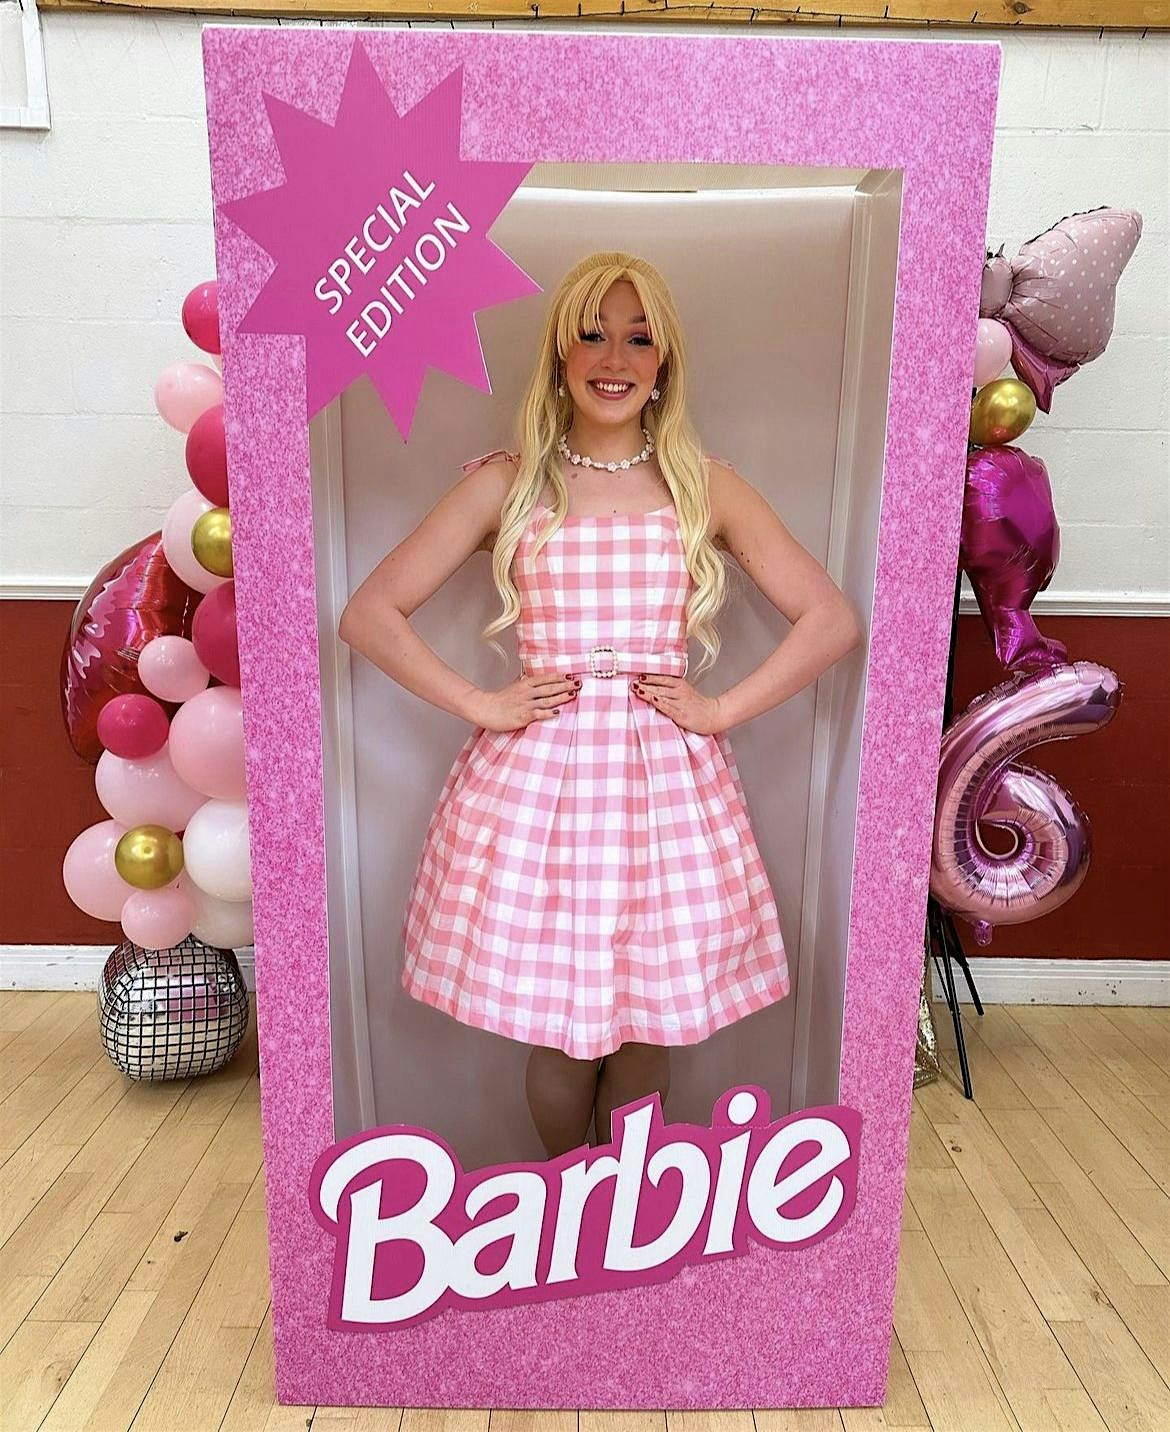 Barbie & Spiderman Spectacular: FREE Mini Disco!